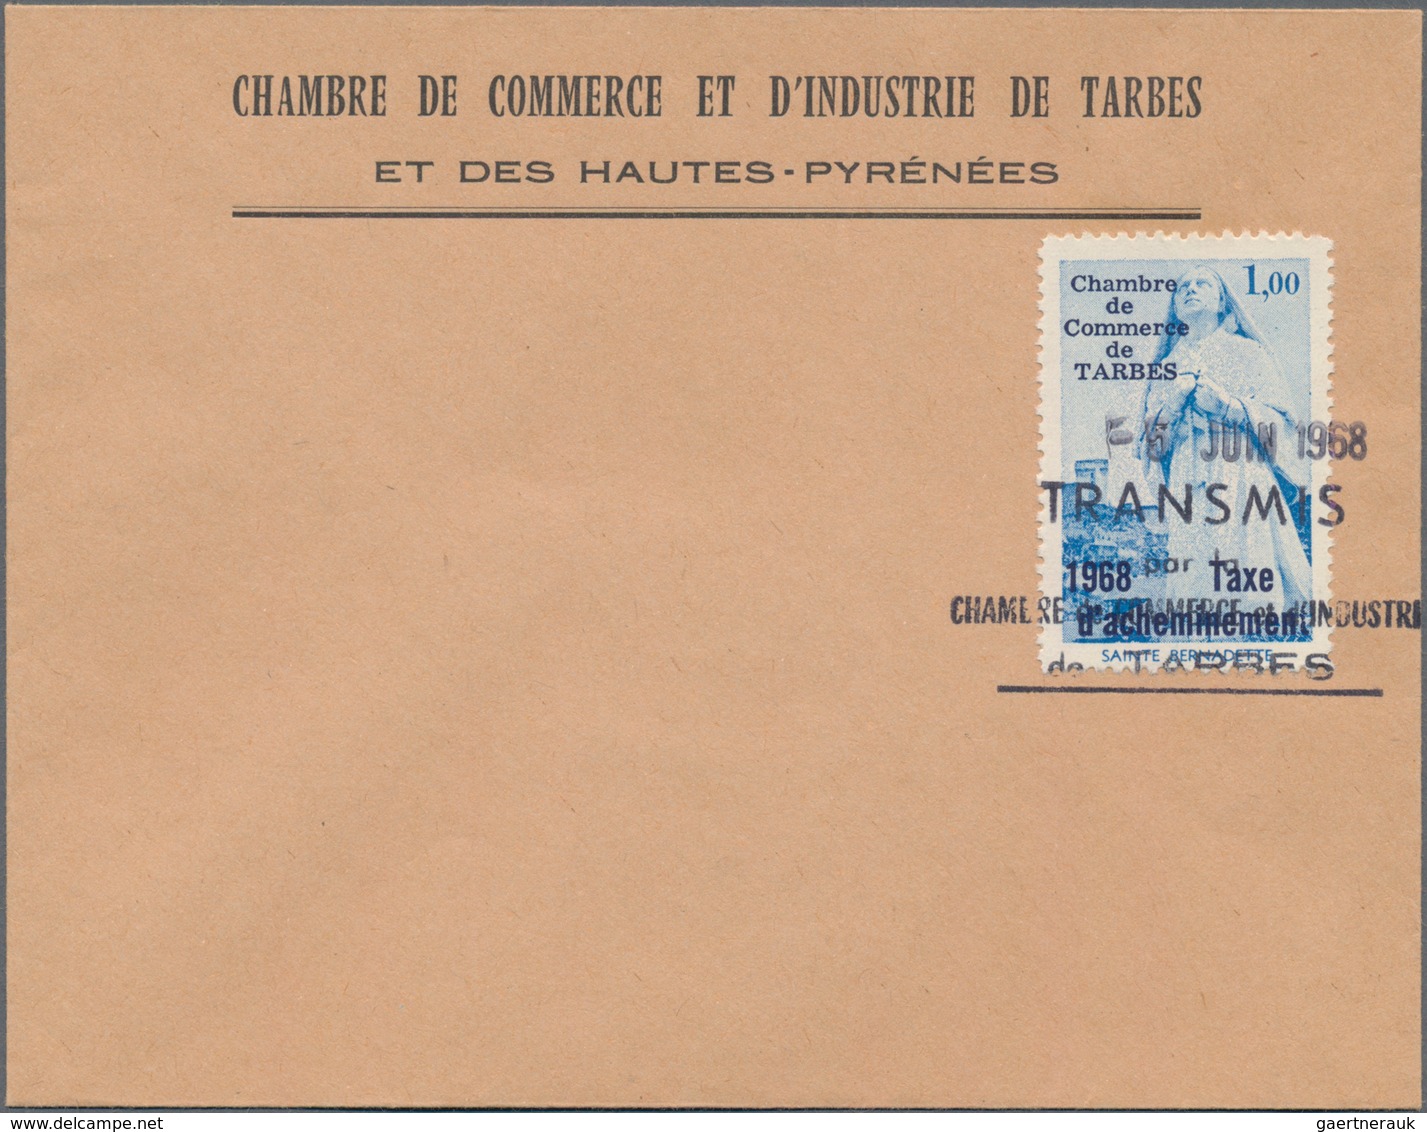 Frankreich - Besonderheiten: 1968, TARBES, POSTAL STRIKE stamps, lot with 8 preprinted envelopes "Ch